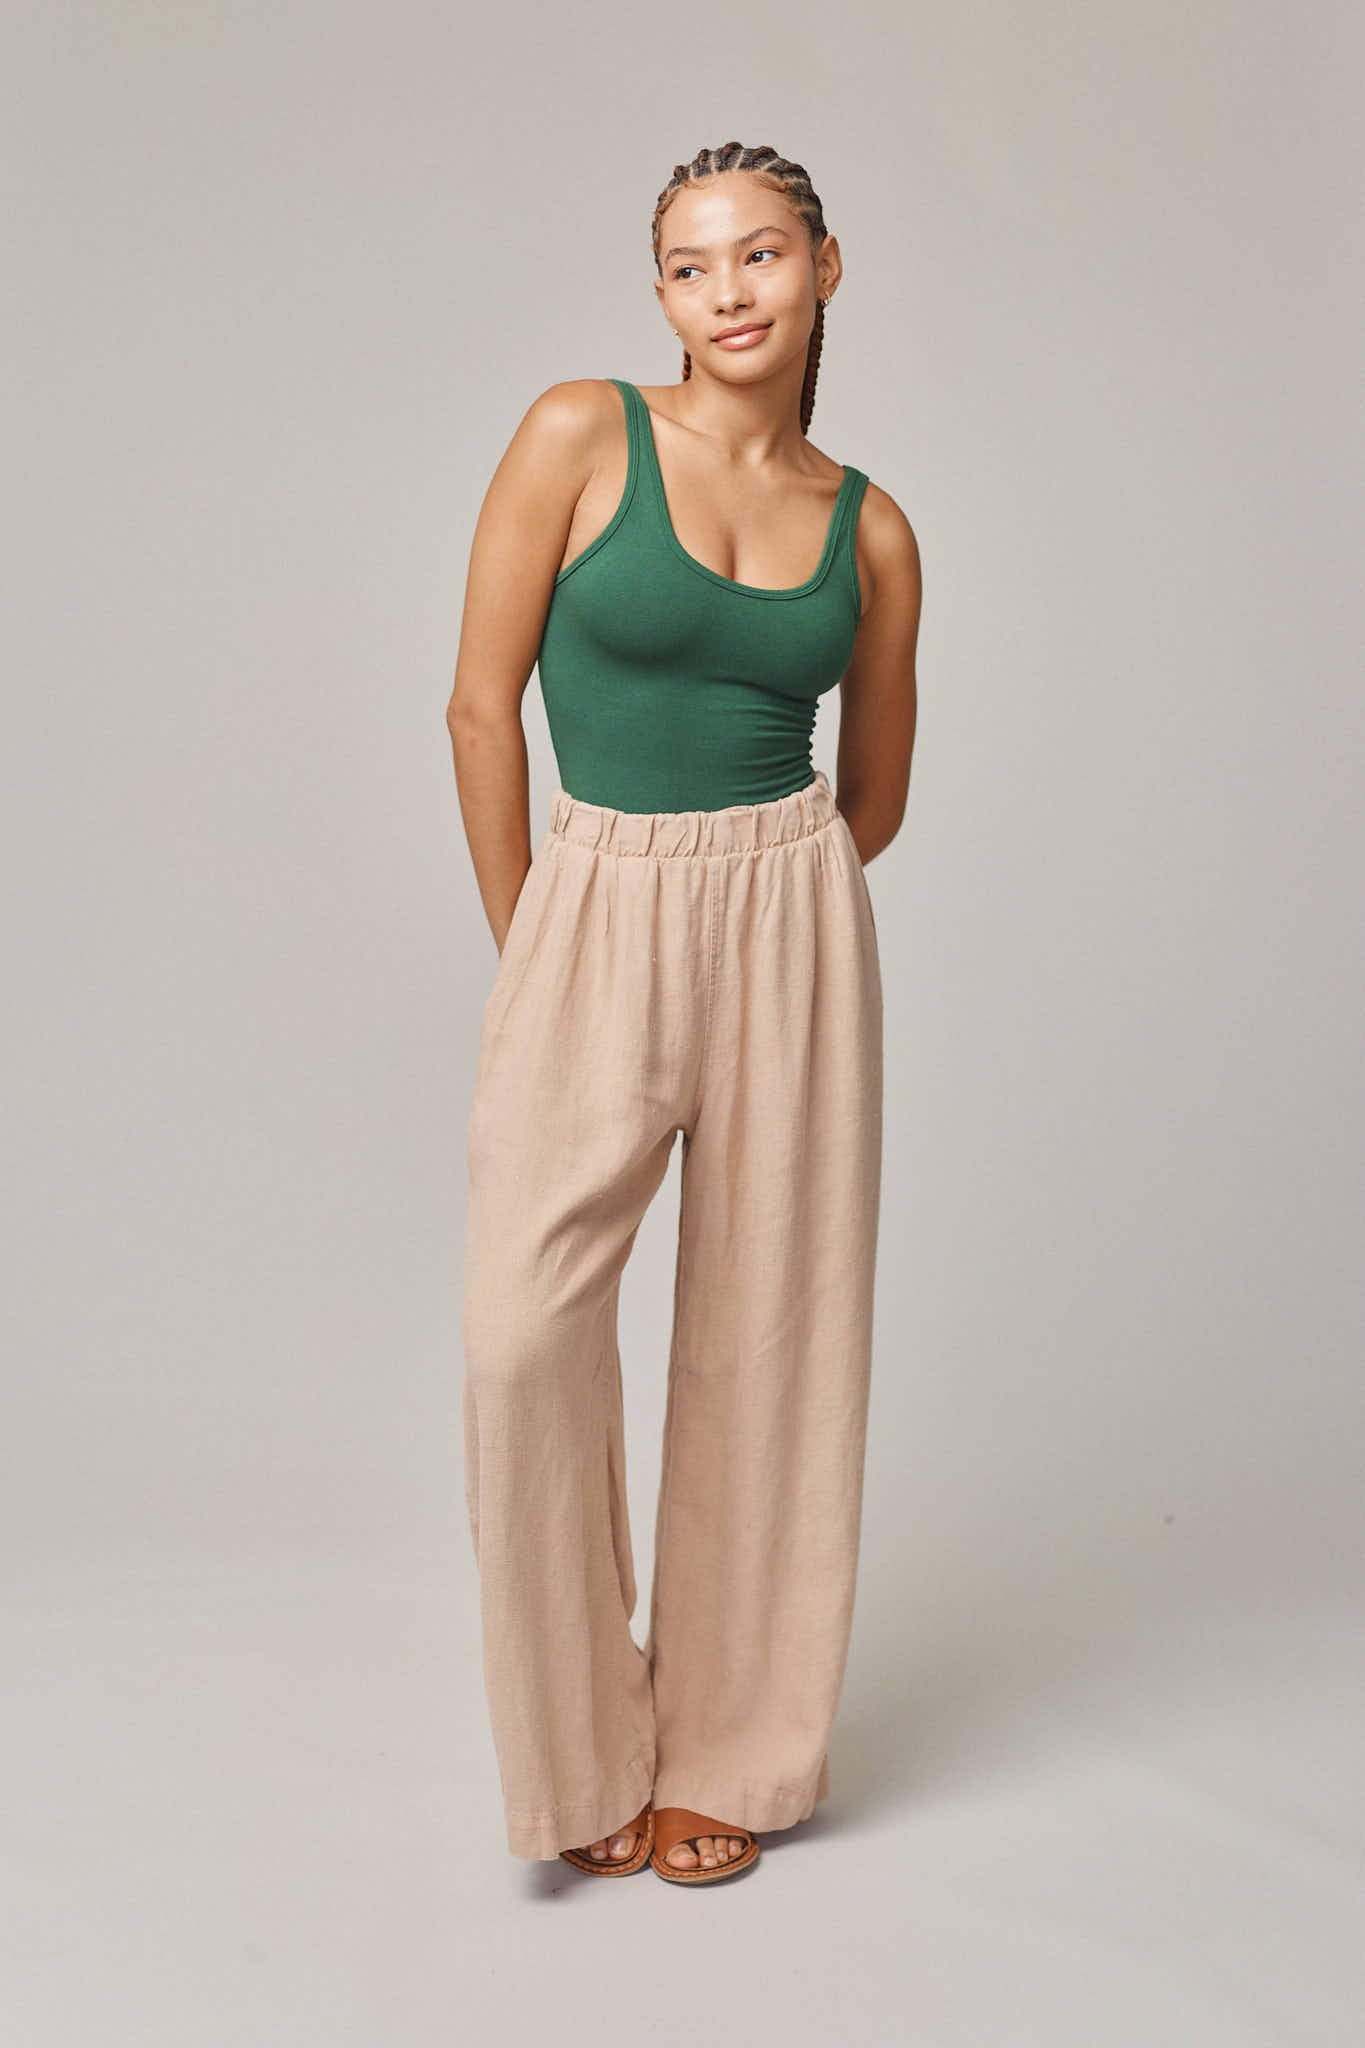 Cambria Pant | Jungmaven Hemp Clothing & Accessories / model_desc: Lana is 5'5” wearing S